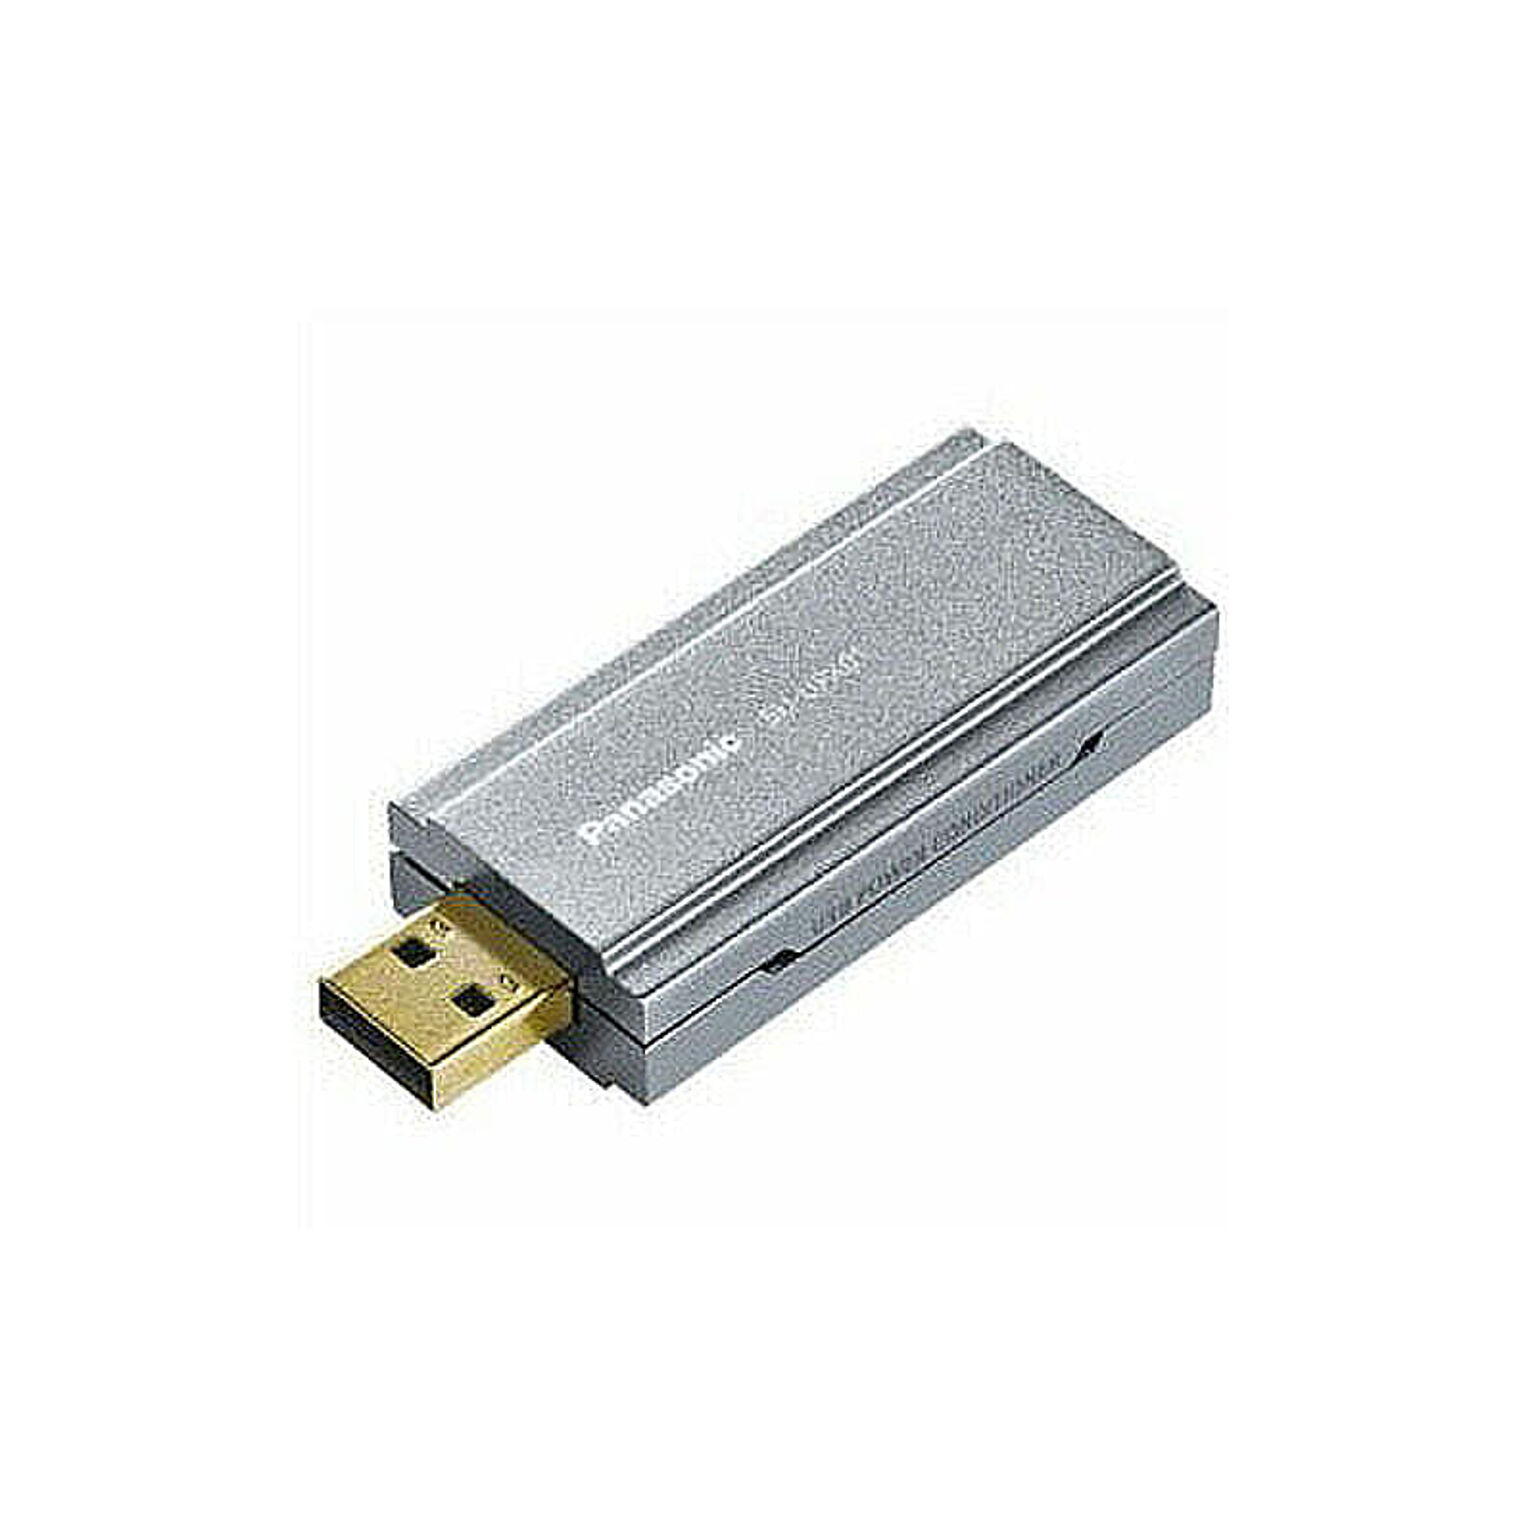 Panasonic USBパワーコンディショナー SH-UPX01 管理No. 4549980021286